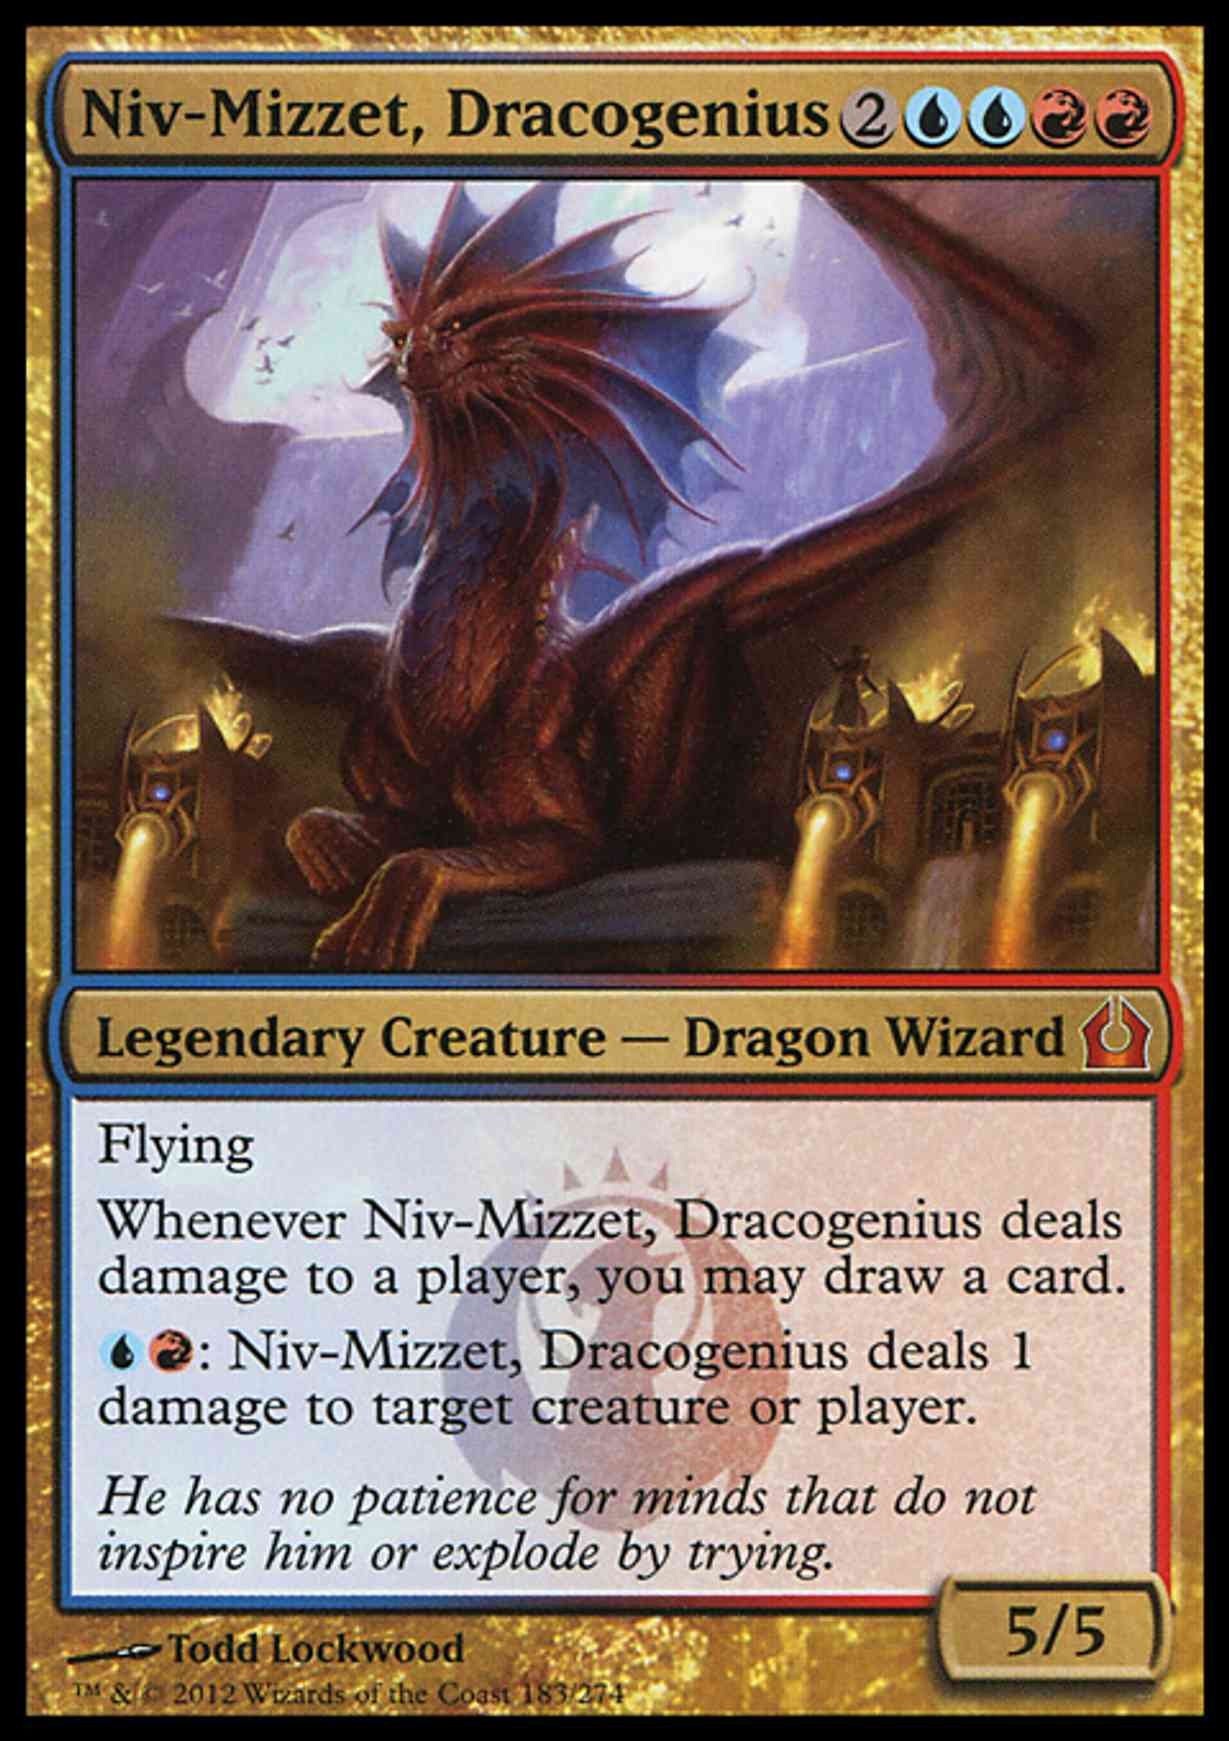 Niv-Mizzet, Dracogenius magic card front